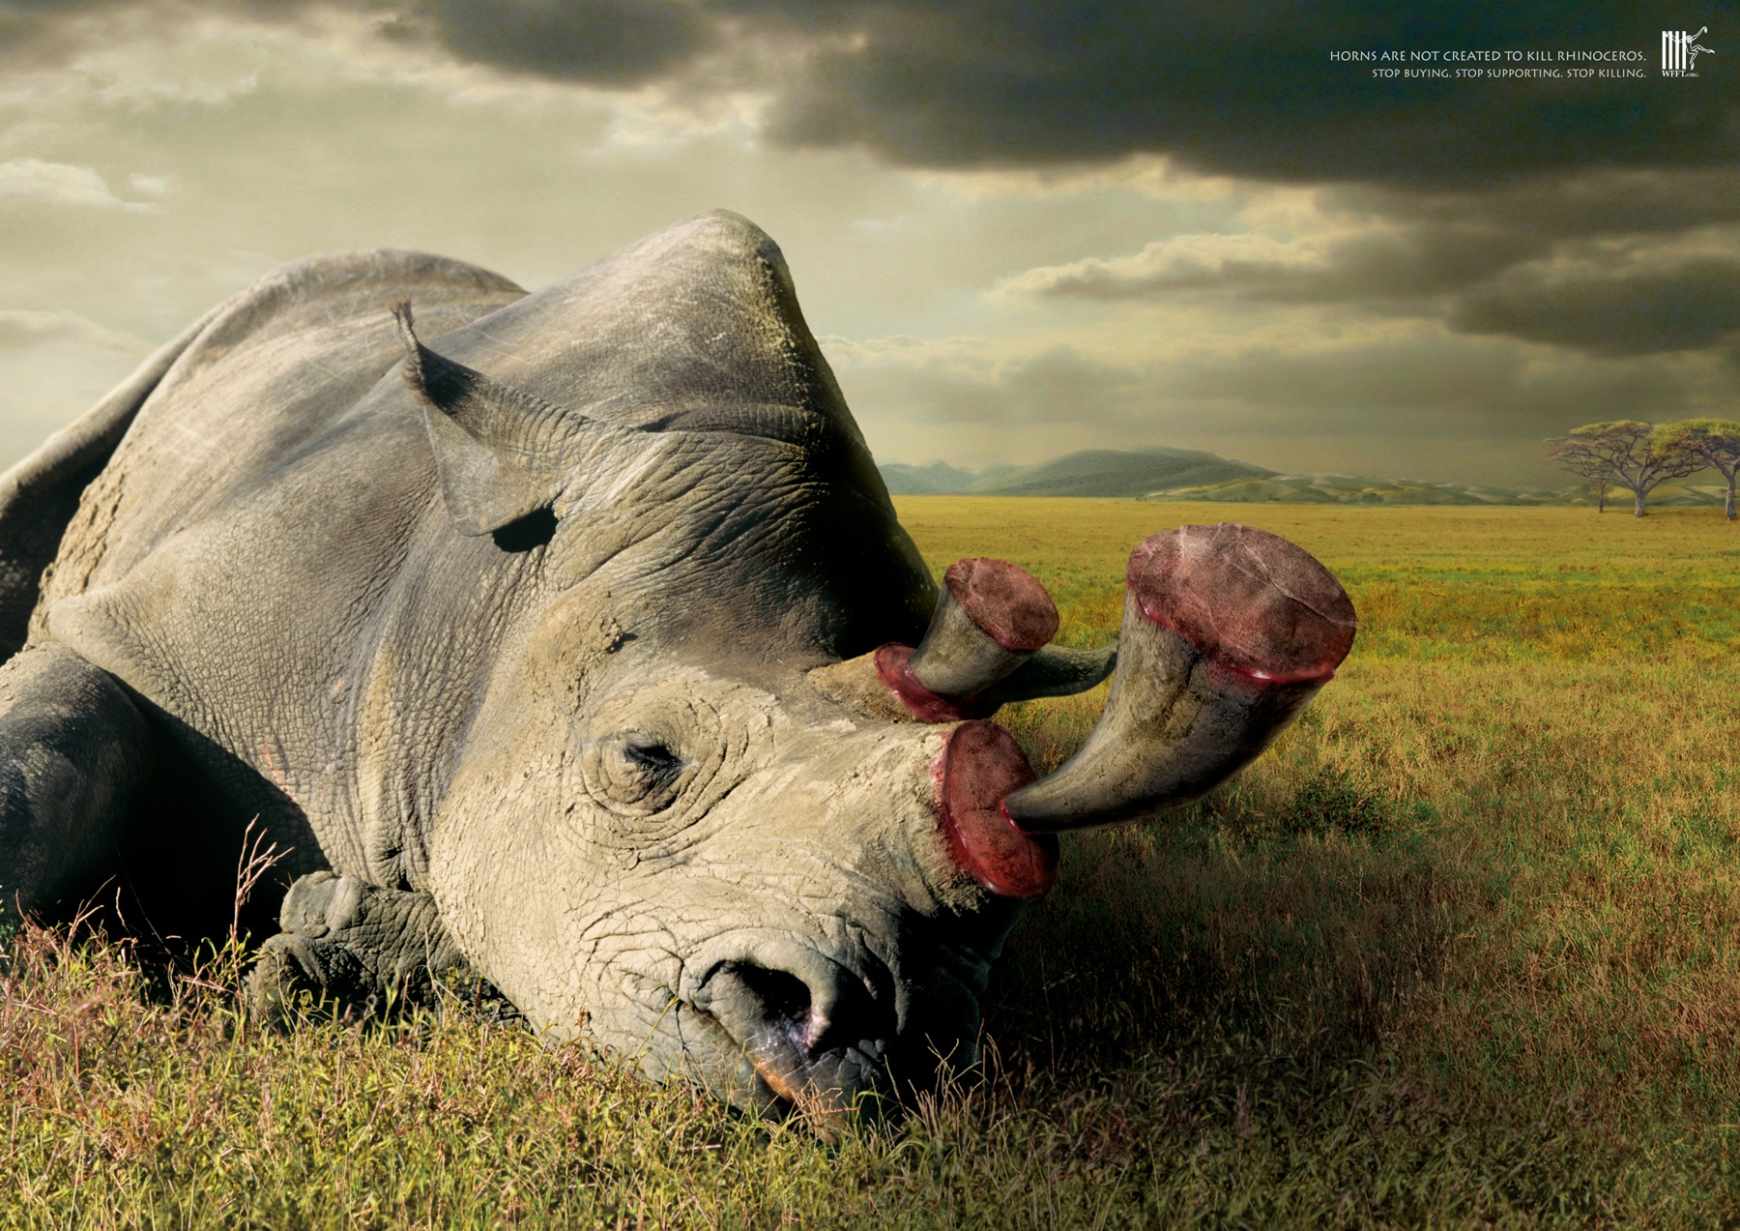 wildlife friend foundation thailand保护动物公益广告设计:停止杀戮